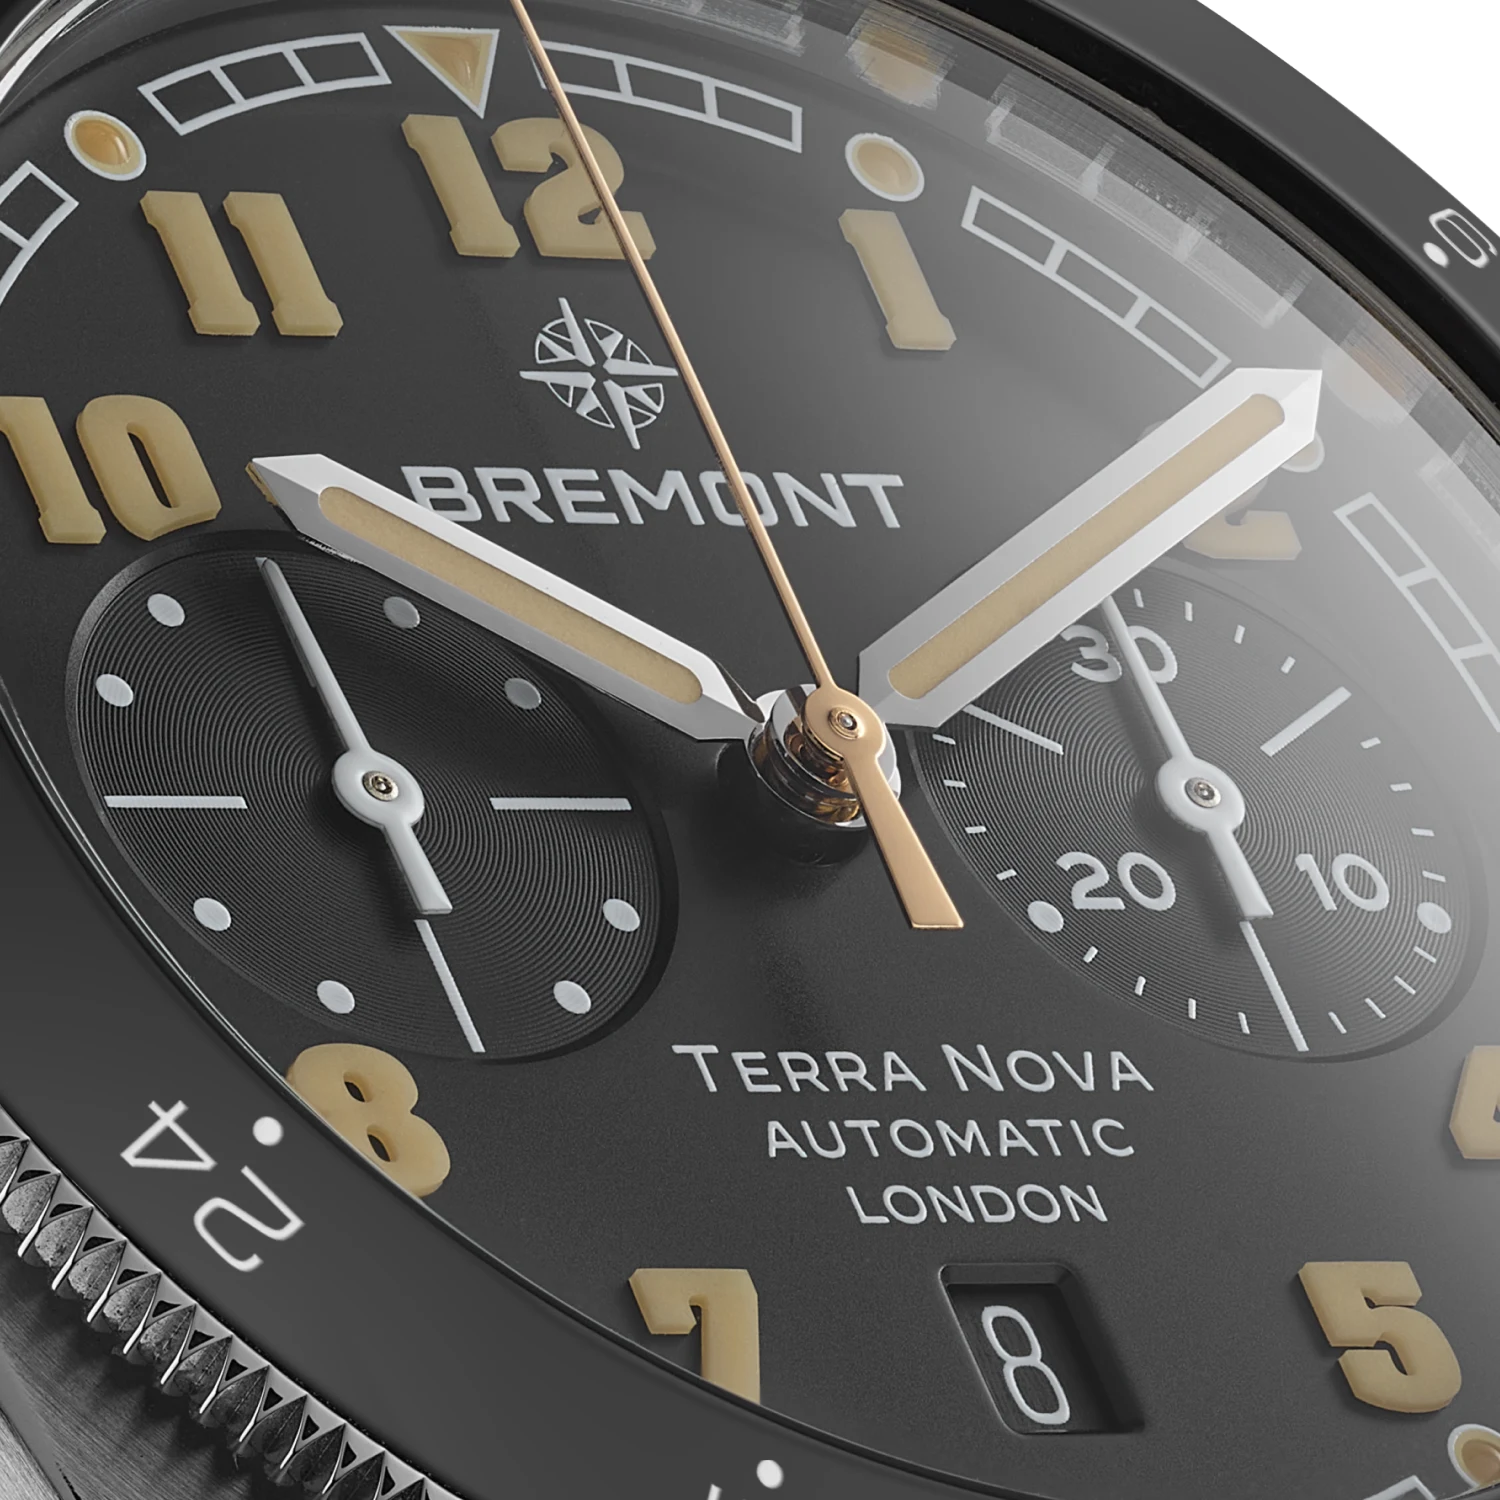 Bremont Watch Company Watches | Mens | Terra Nova Terra Nova 42.5 Chronograph [Black Dial, Bracelet]